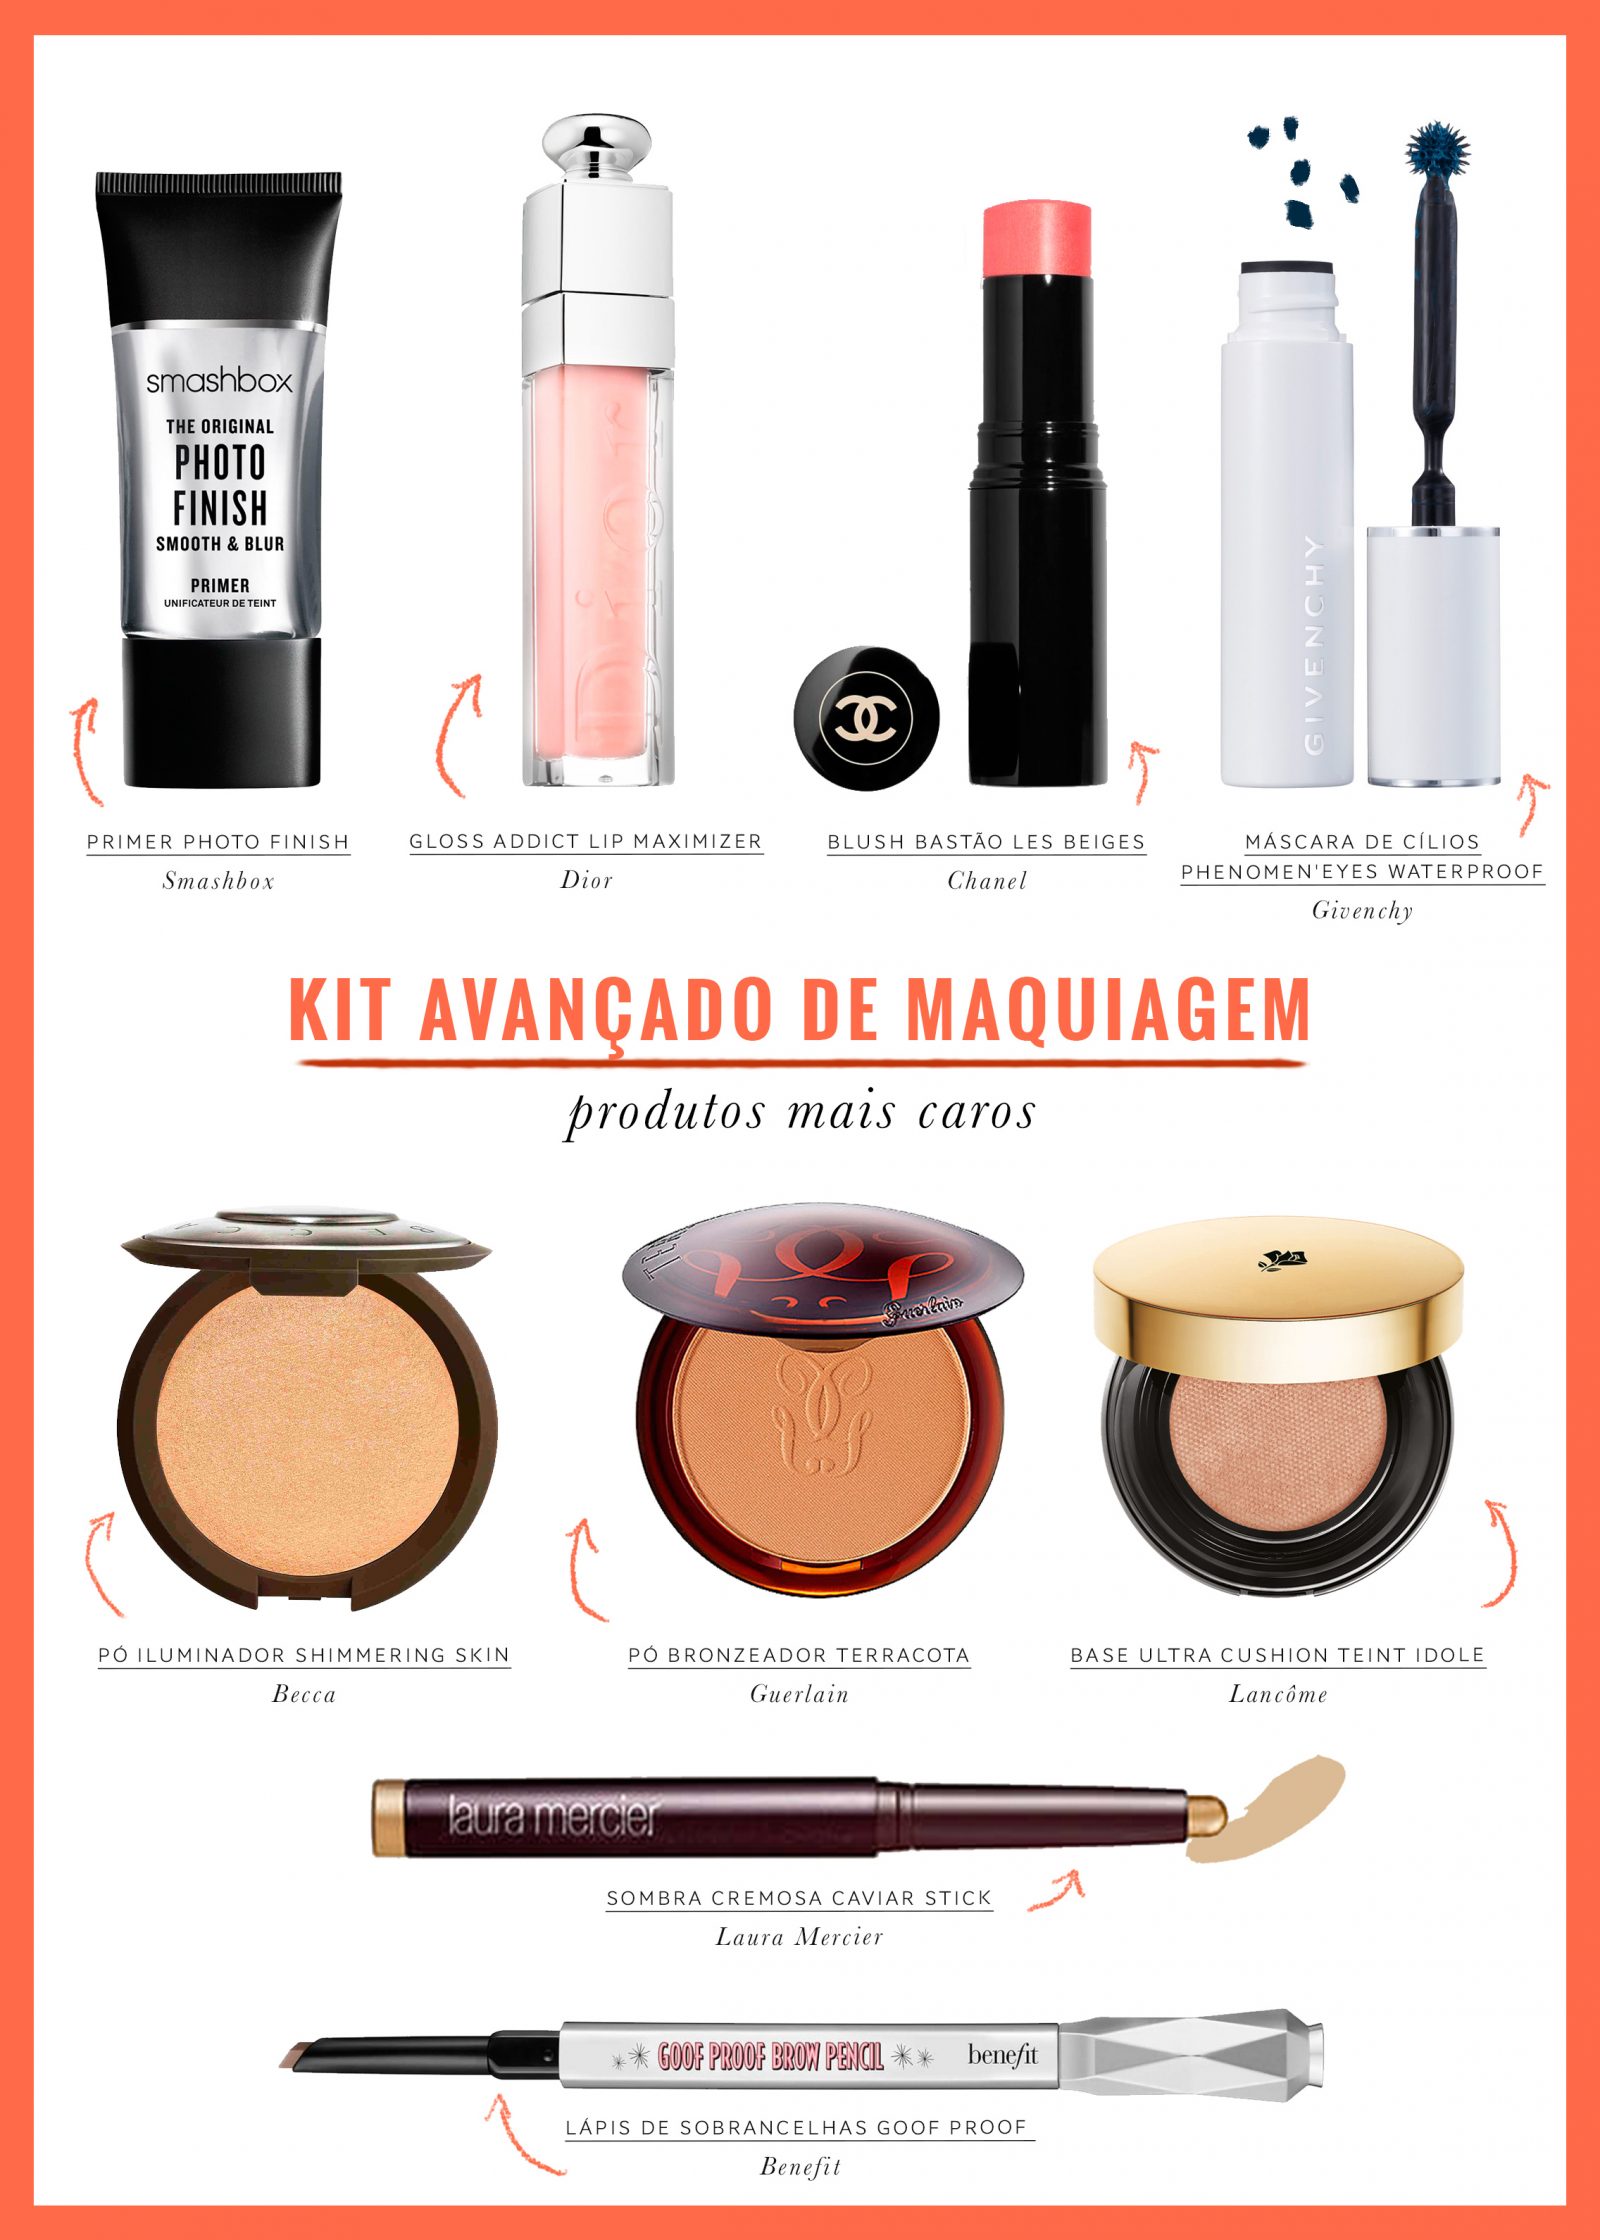 Source Kit de maquiagem personalizado qs, kit de maquiagem de